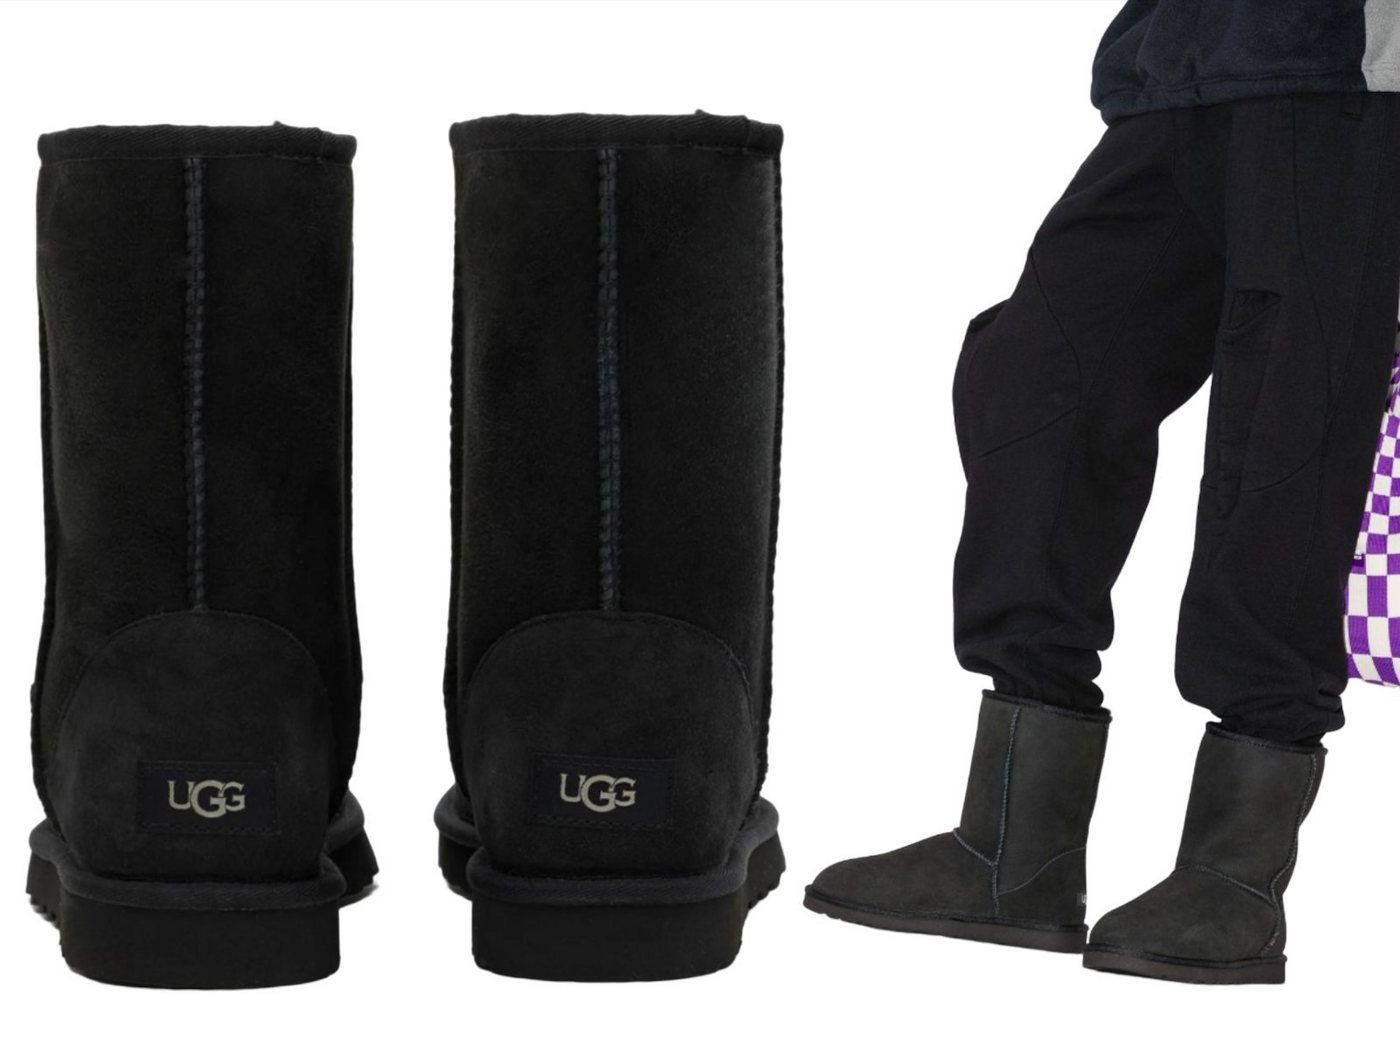 UGG UGG Boots Classic Short Men's Shearling Suede Stiefel Schuhe Shoes Bla Sneaker von UGG